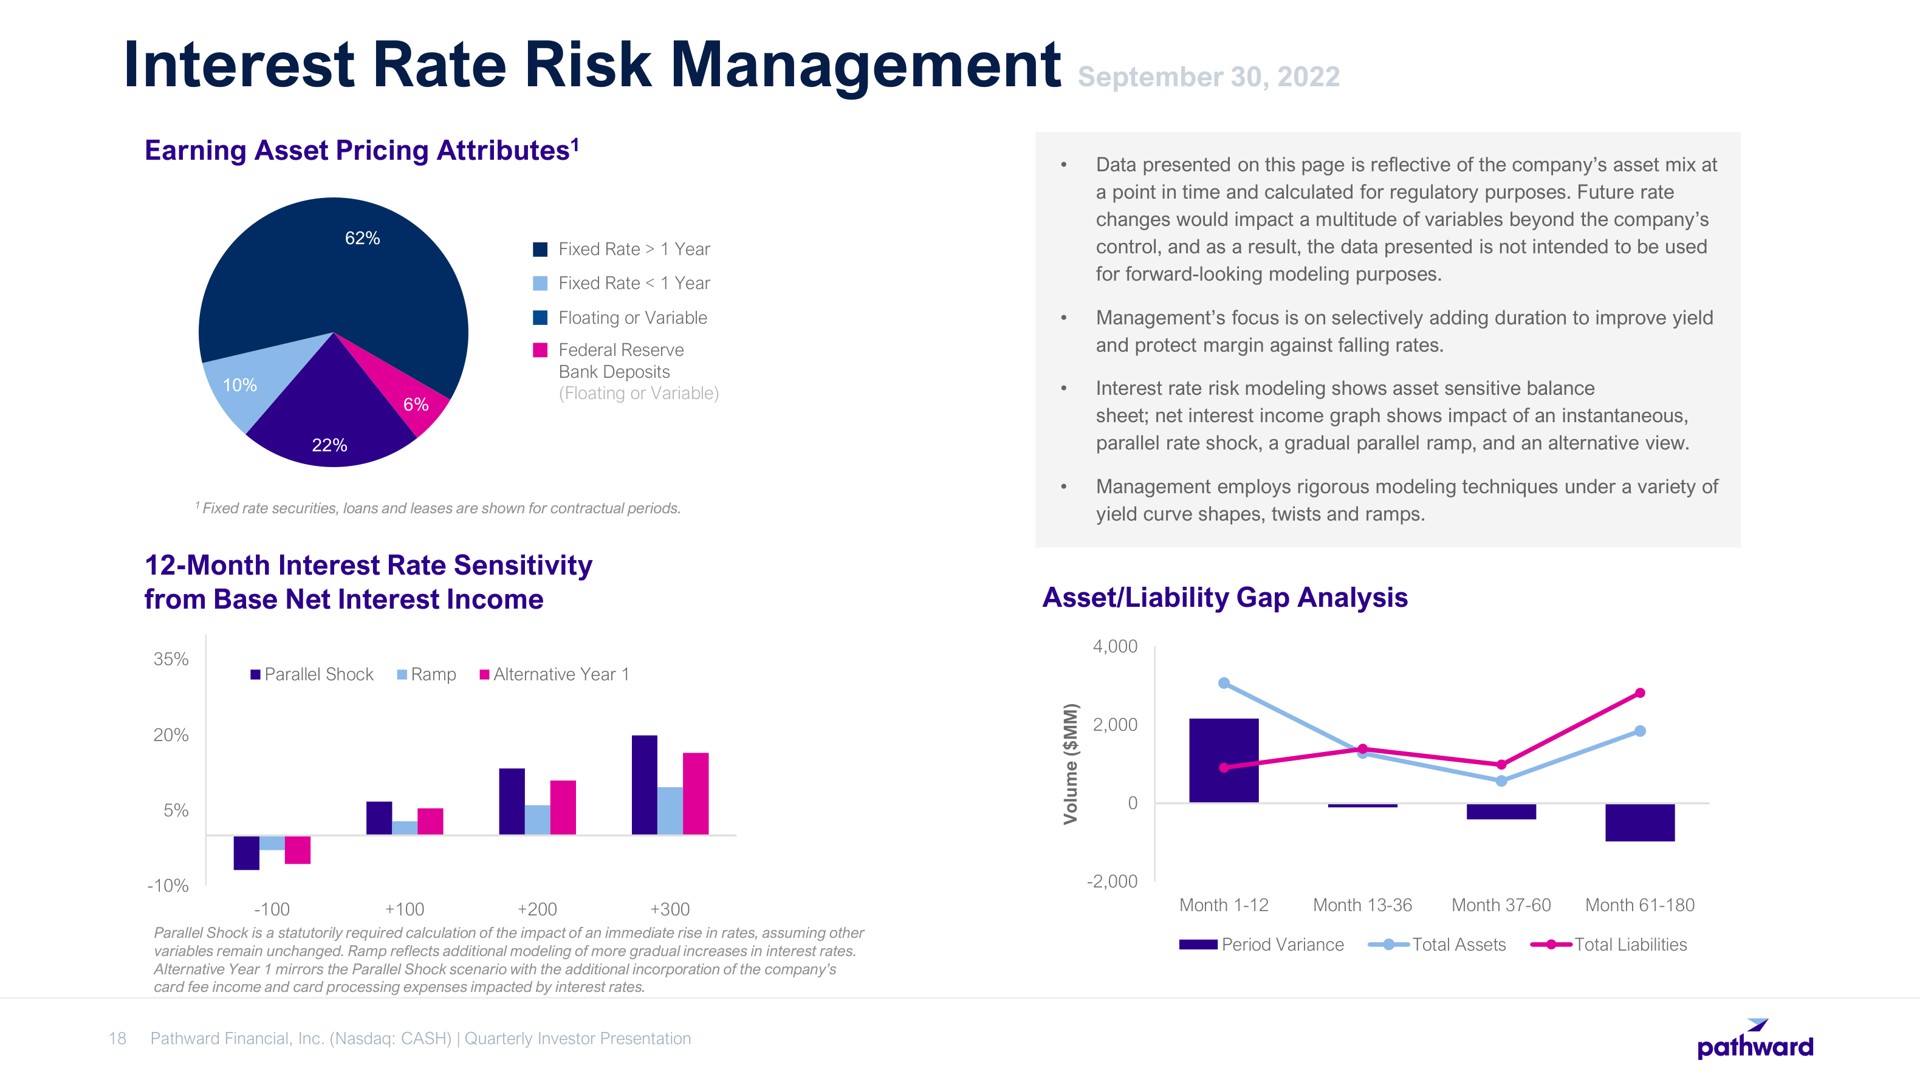 interest rate risk management i | Pathward Financial